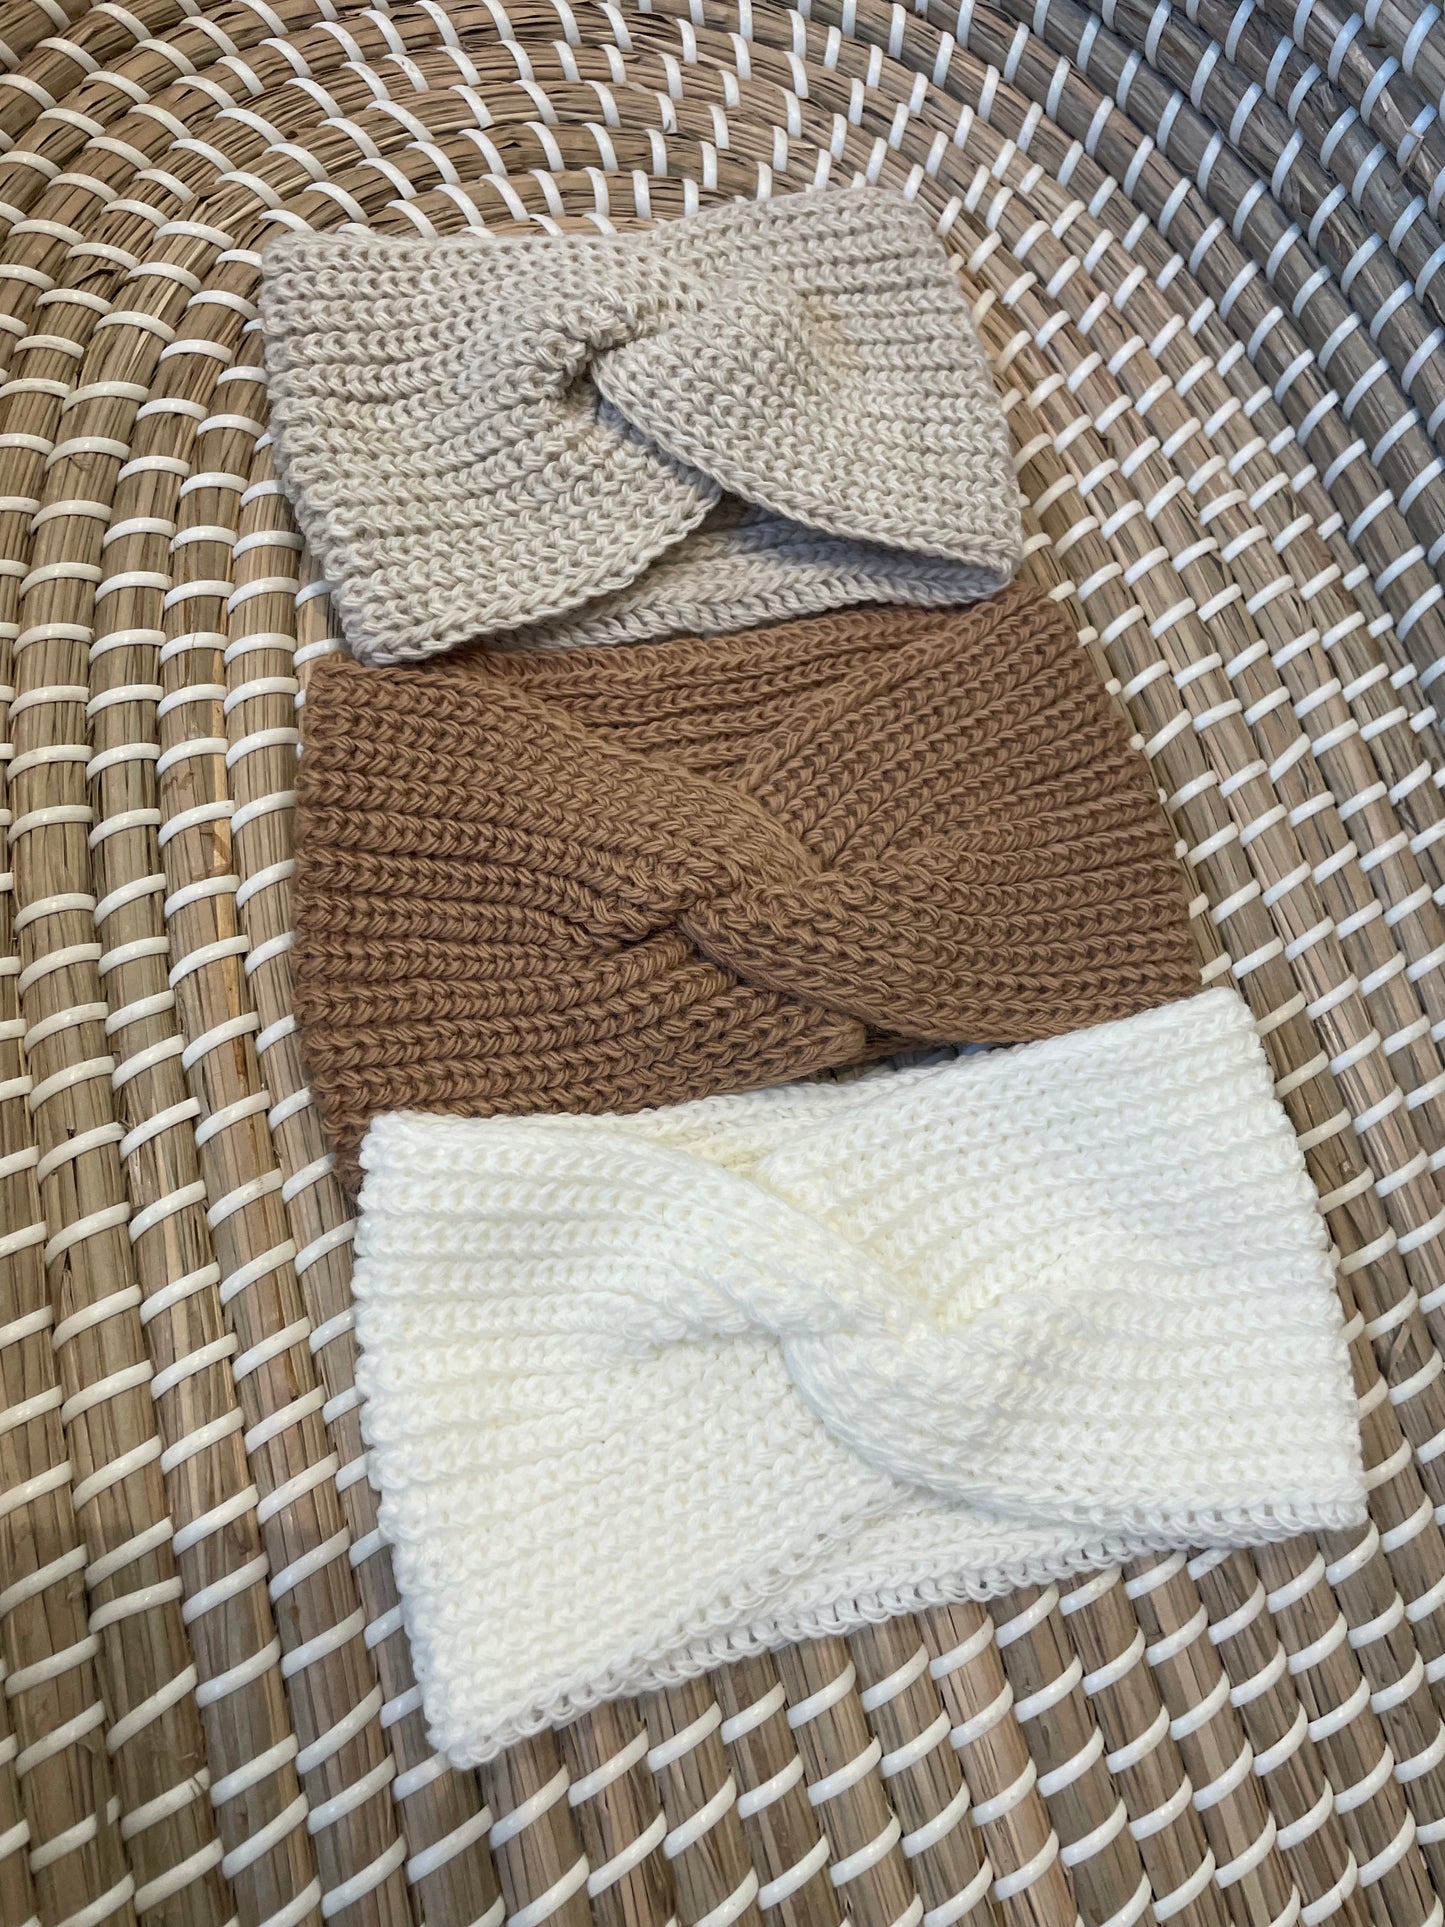 Hand knitted headbands